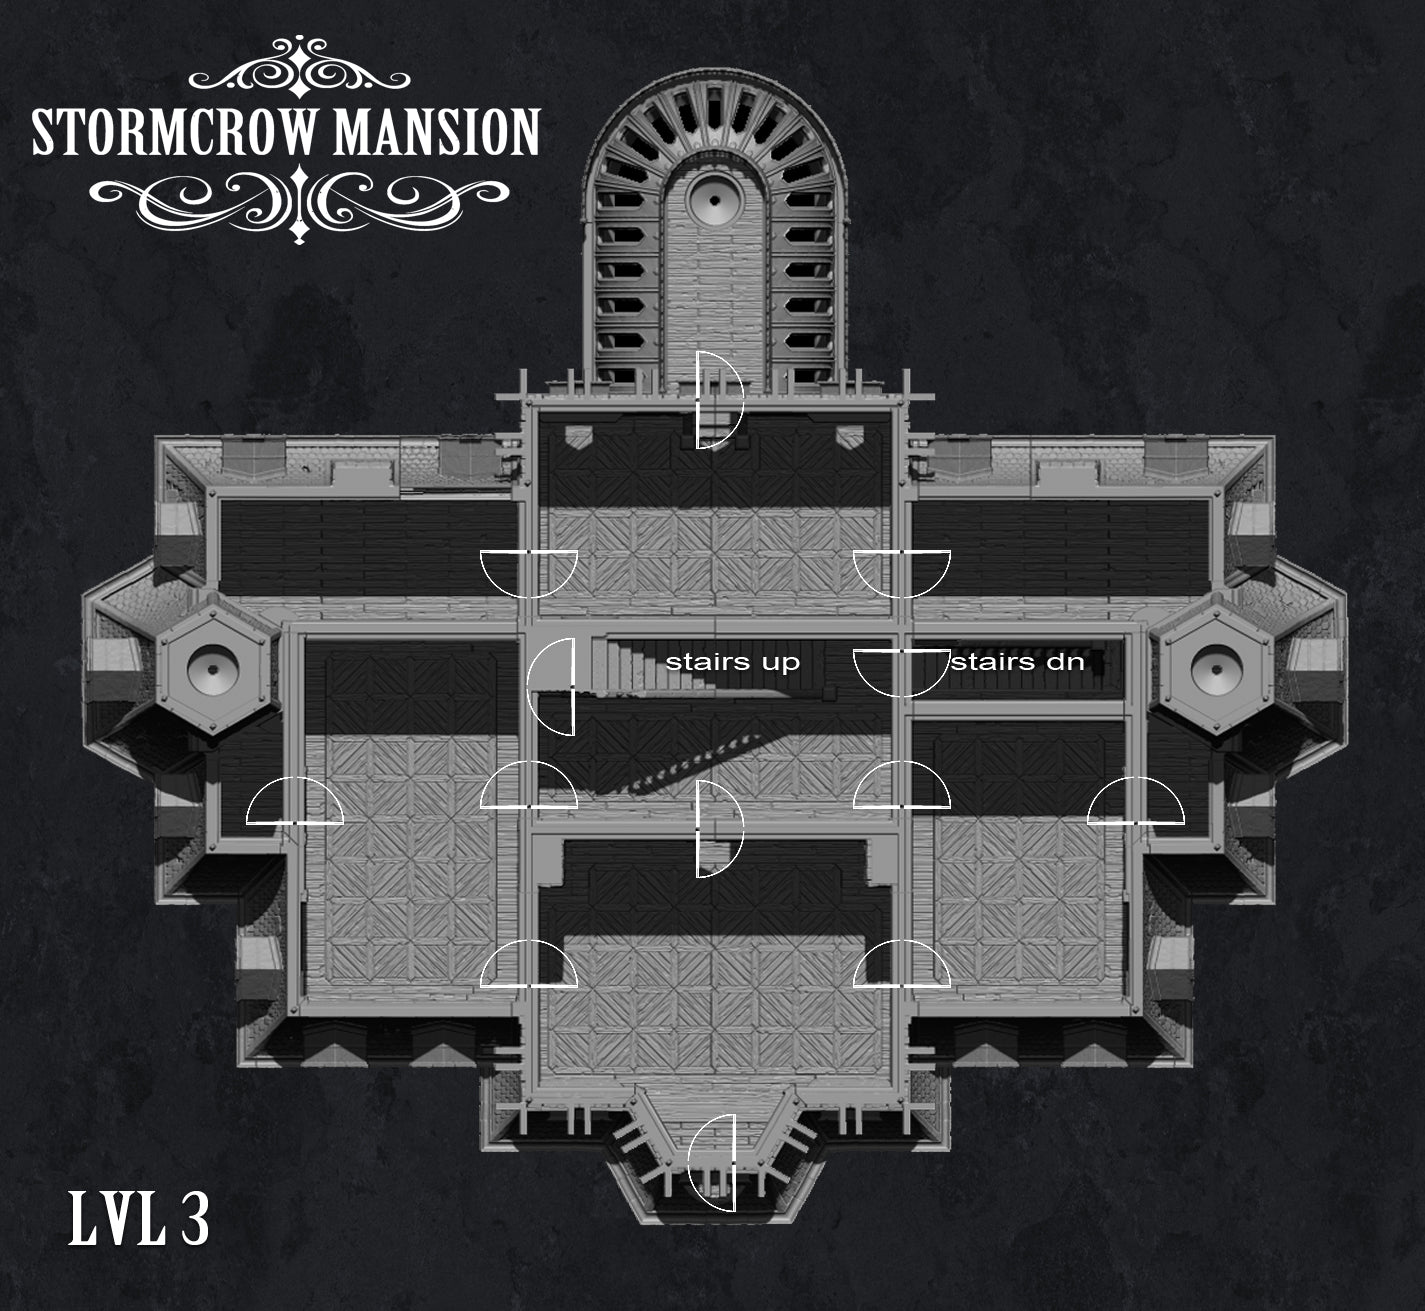 Stormcrow Mansion no basement